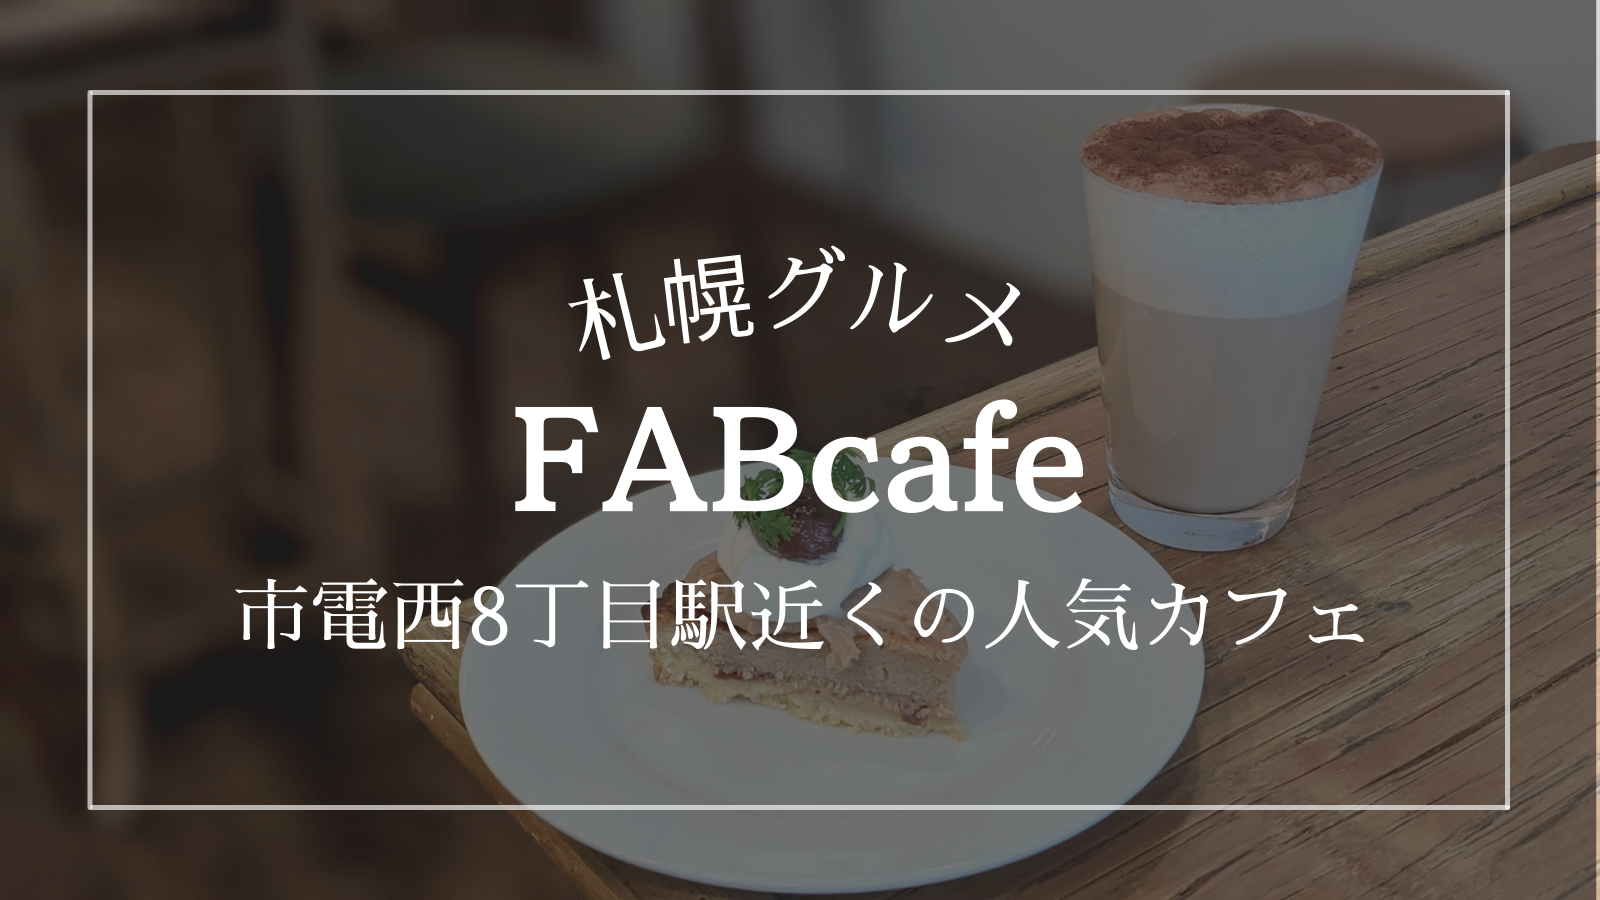 fabcafe ファブカフェ 札幌